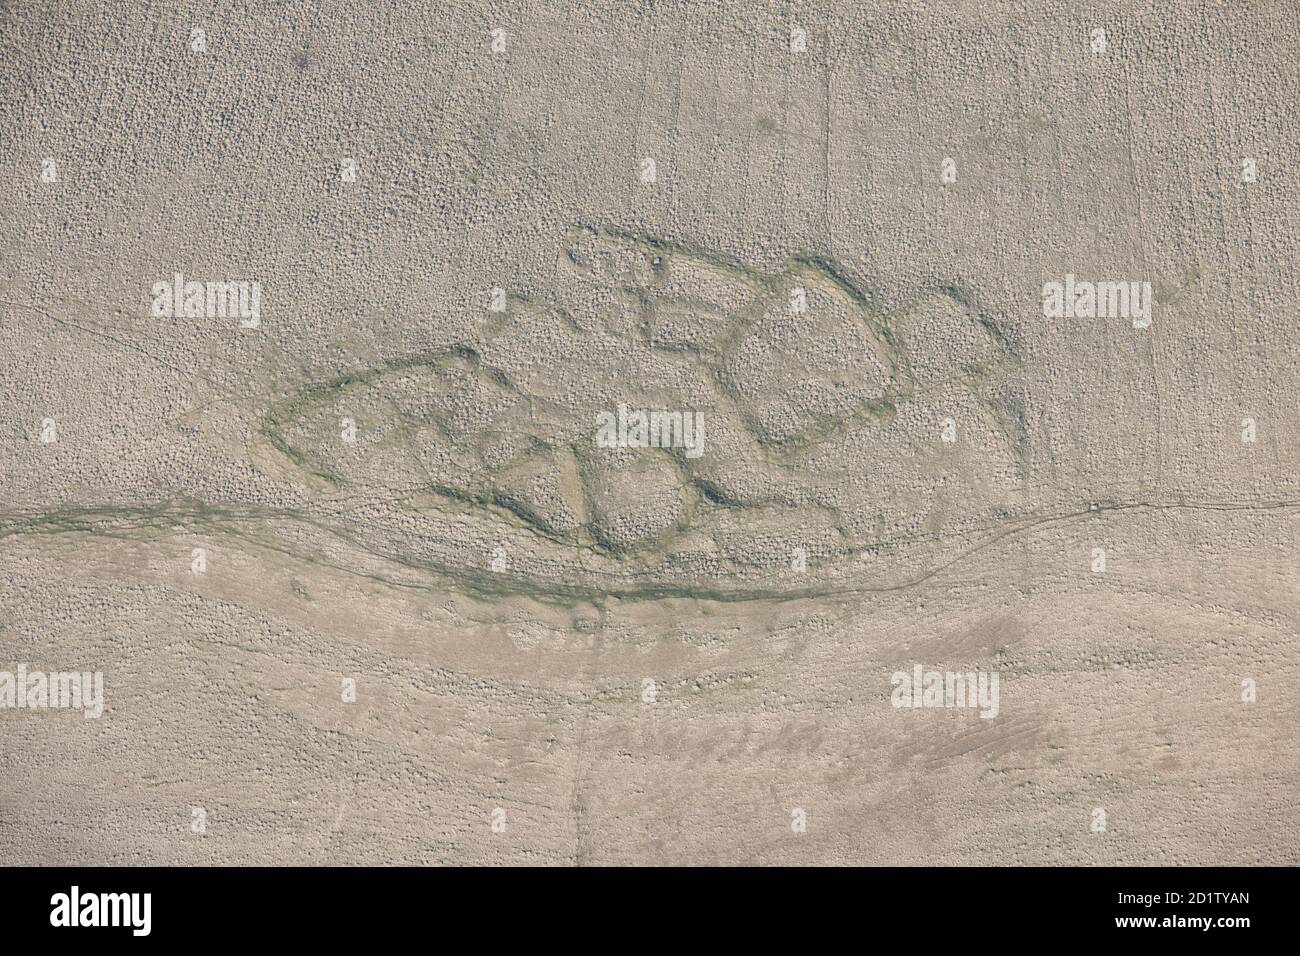 A Romano British enclosed settlement earthwork at Intake, Crosby Garrett Fell, Cumbria, 2014, UK. Aerial view. Stock Photo